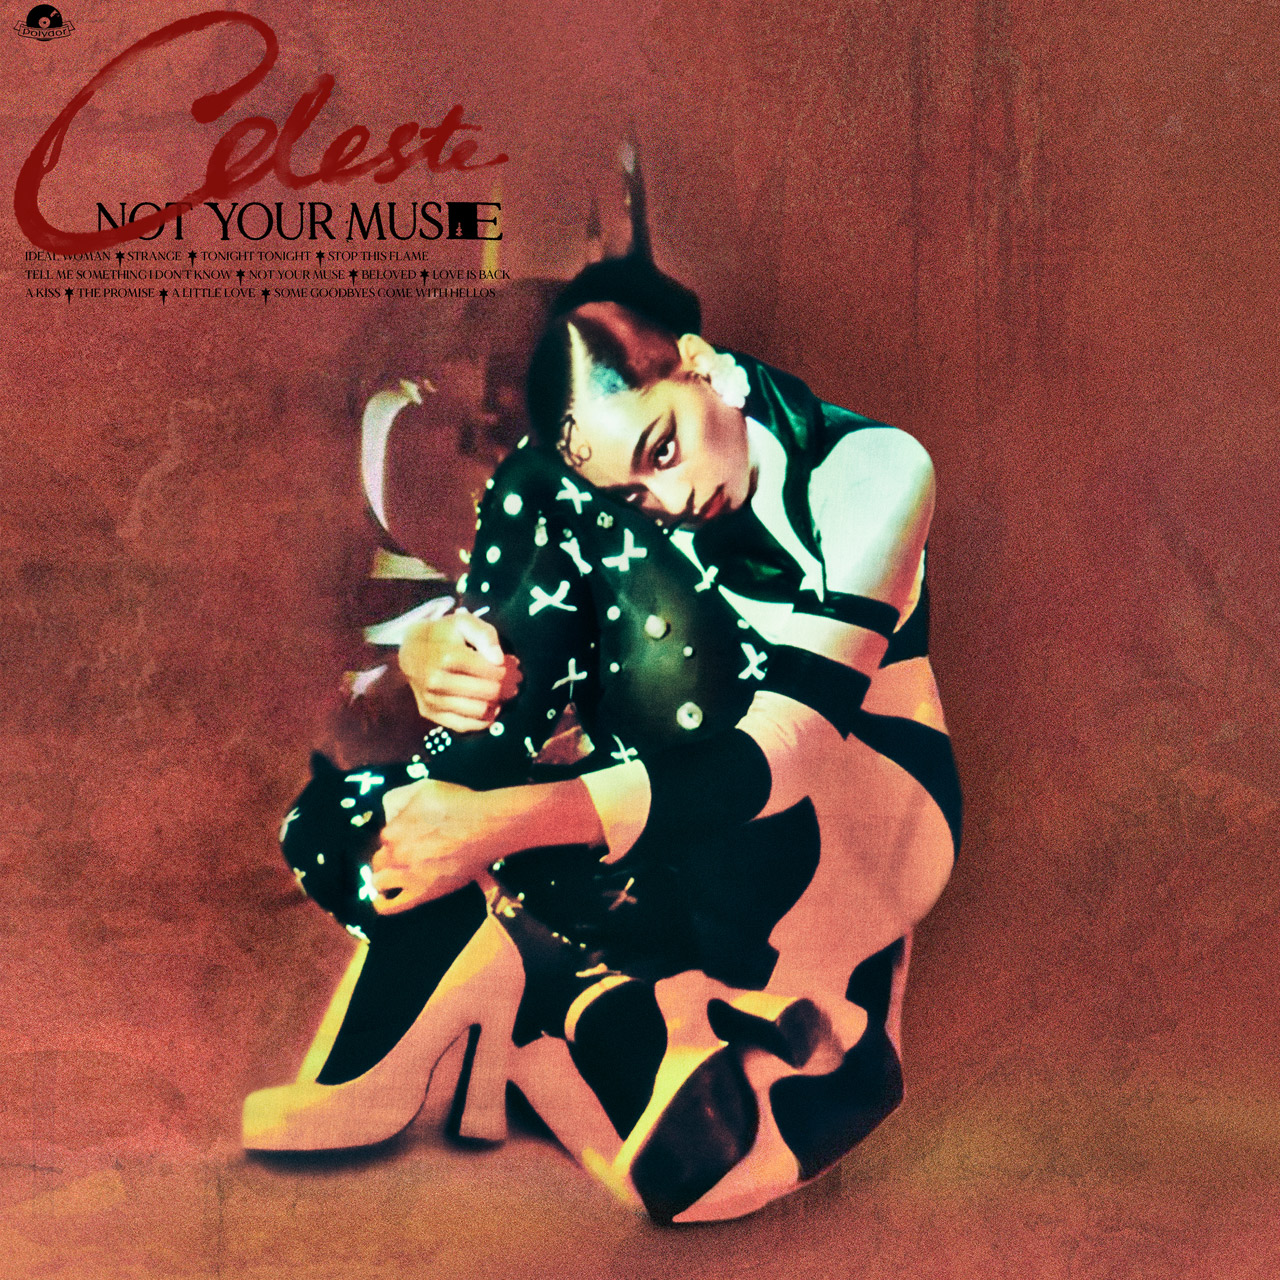 Albumcover von Celeste - "Not Your Muse"